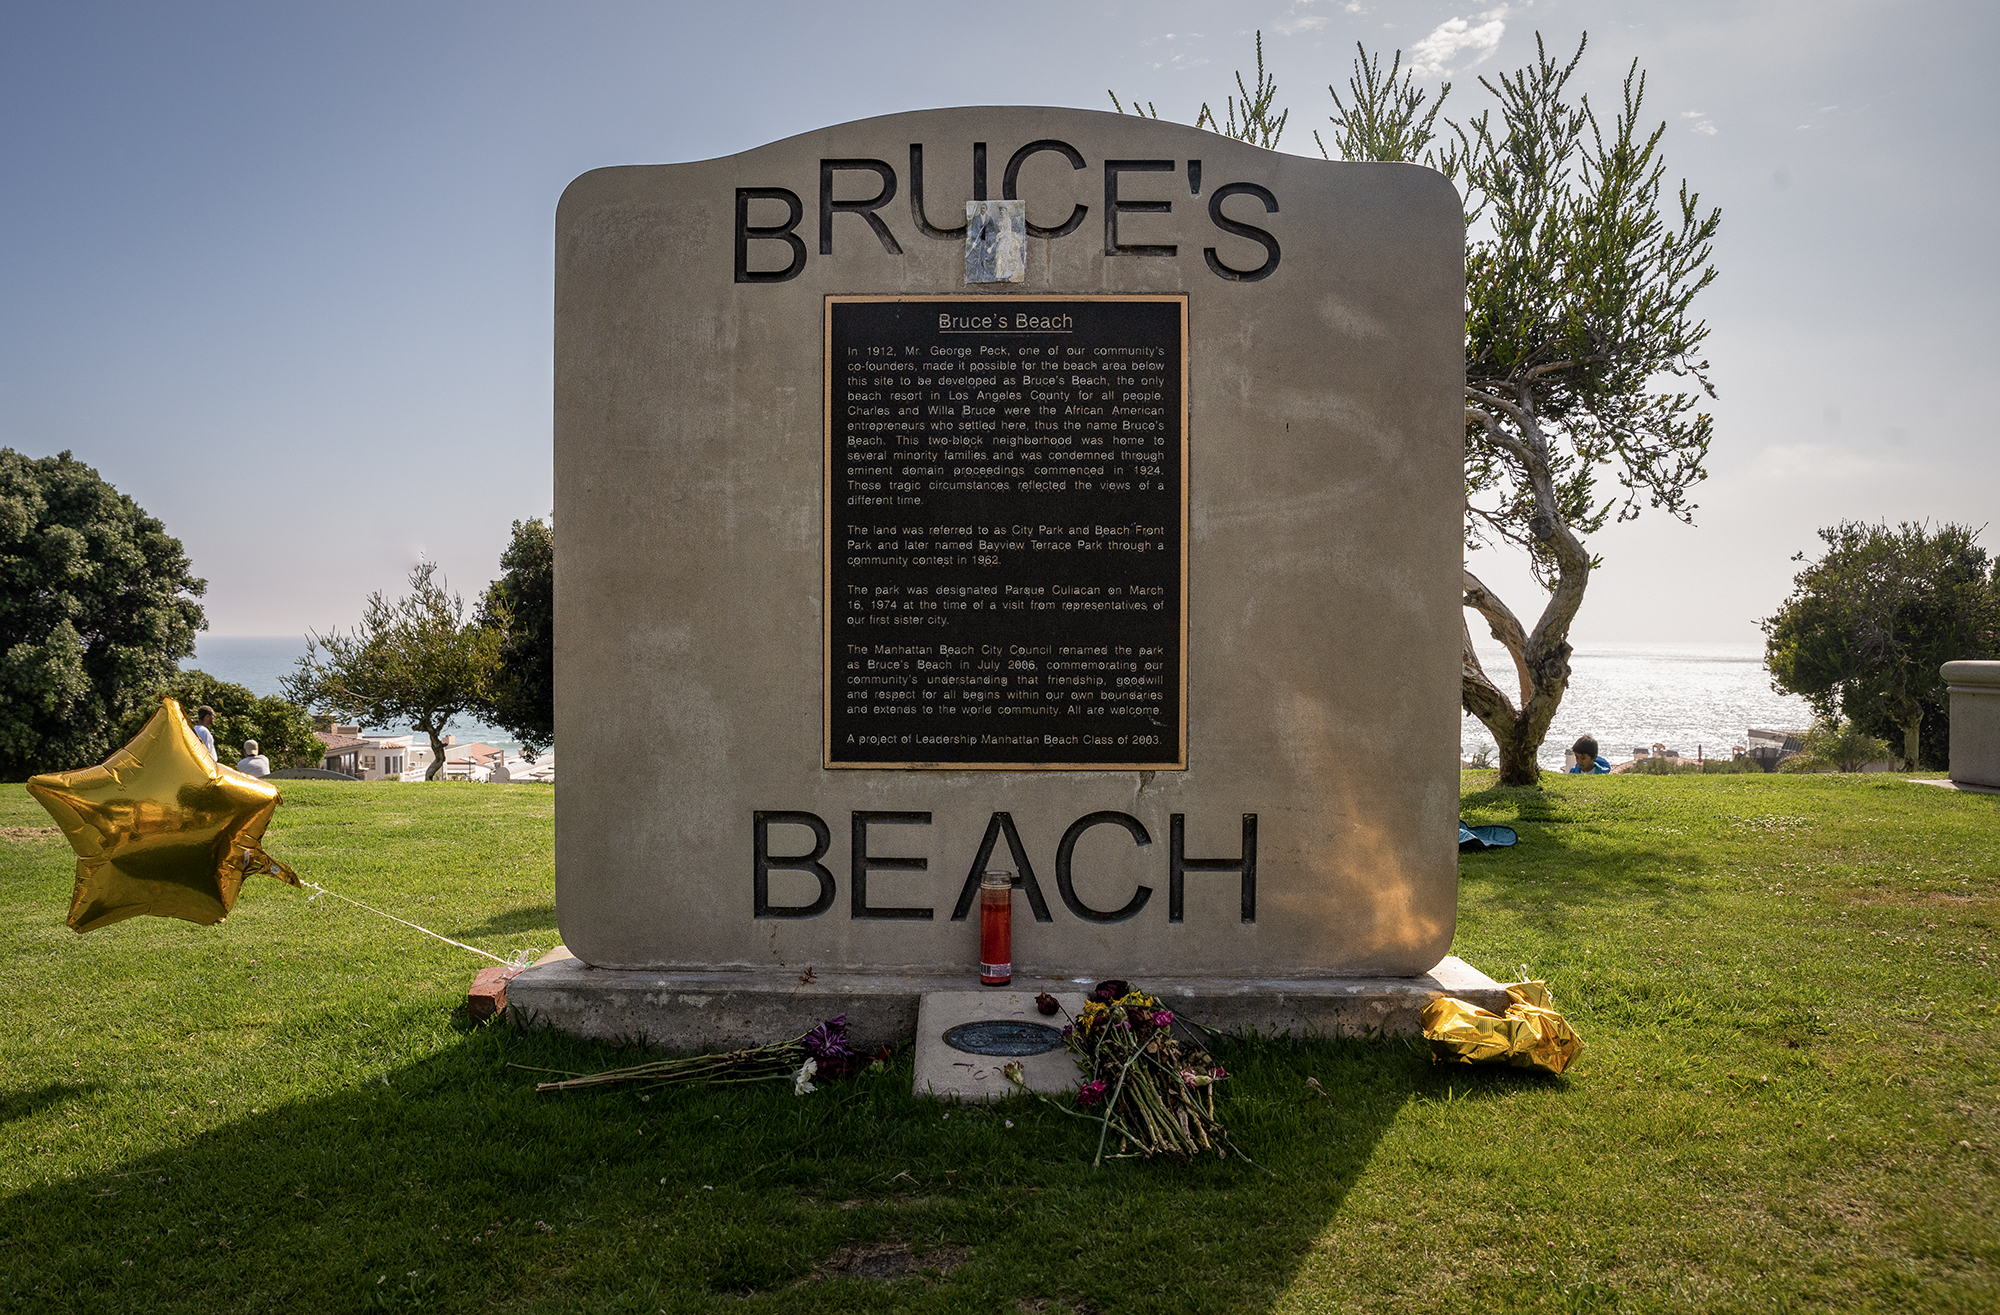 A memorial stone plaque reads "Bruce's Beach."